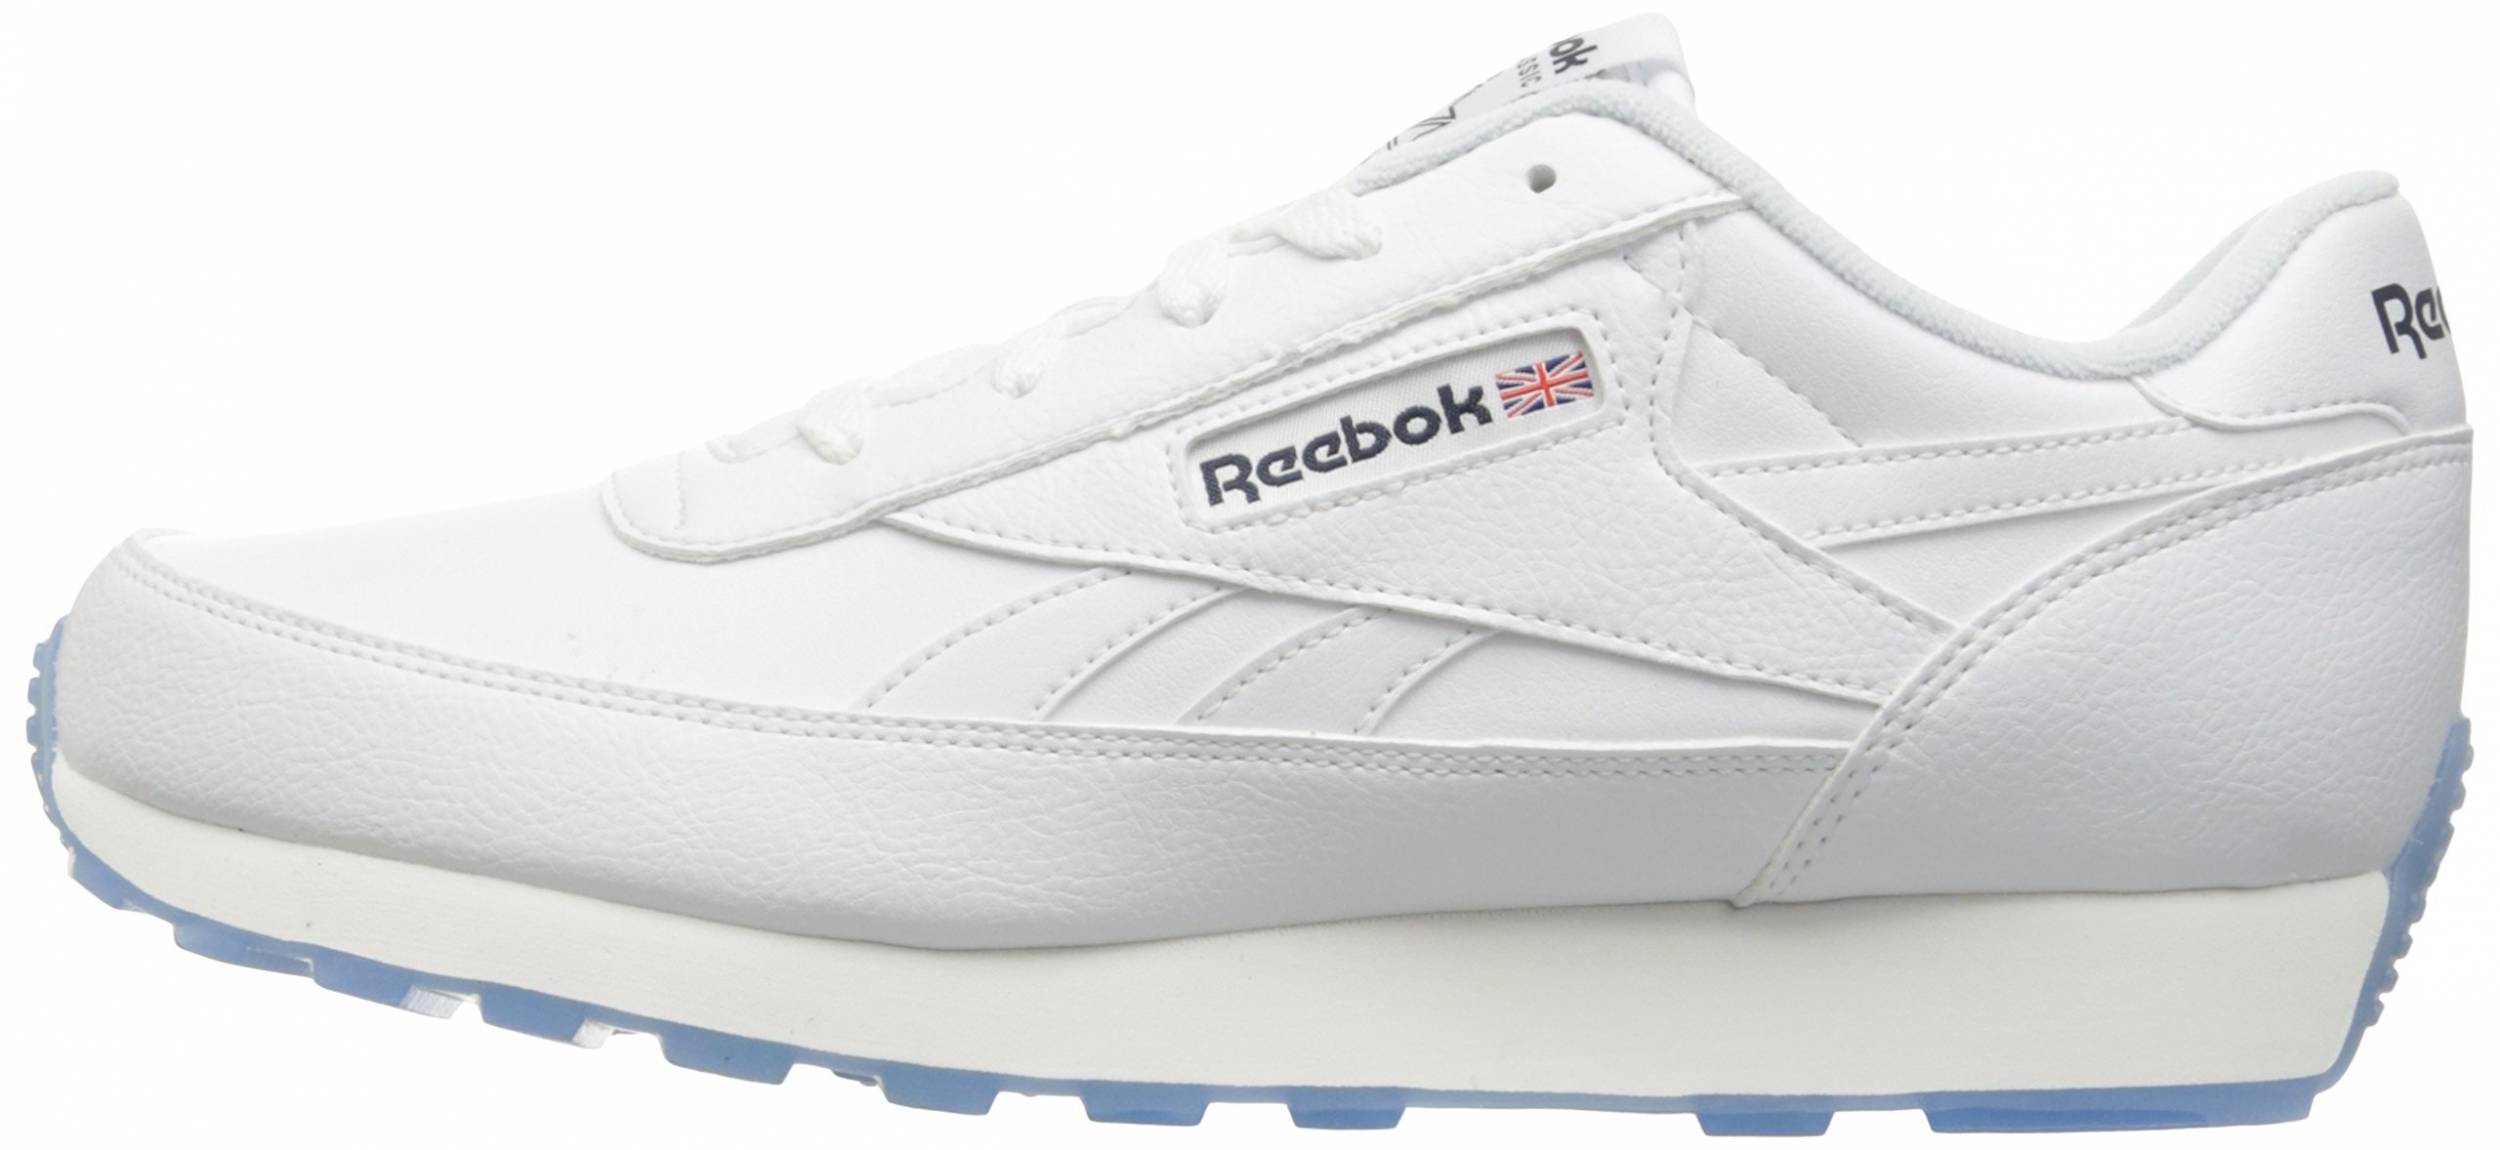 reebok men's classic renaissance walking shoe